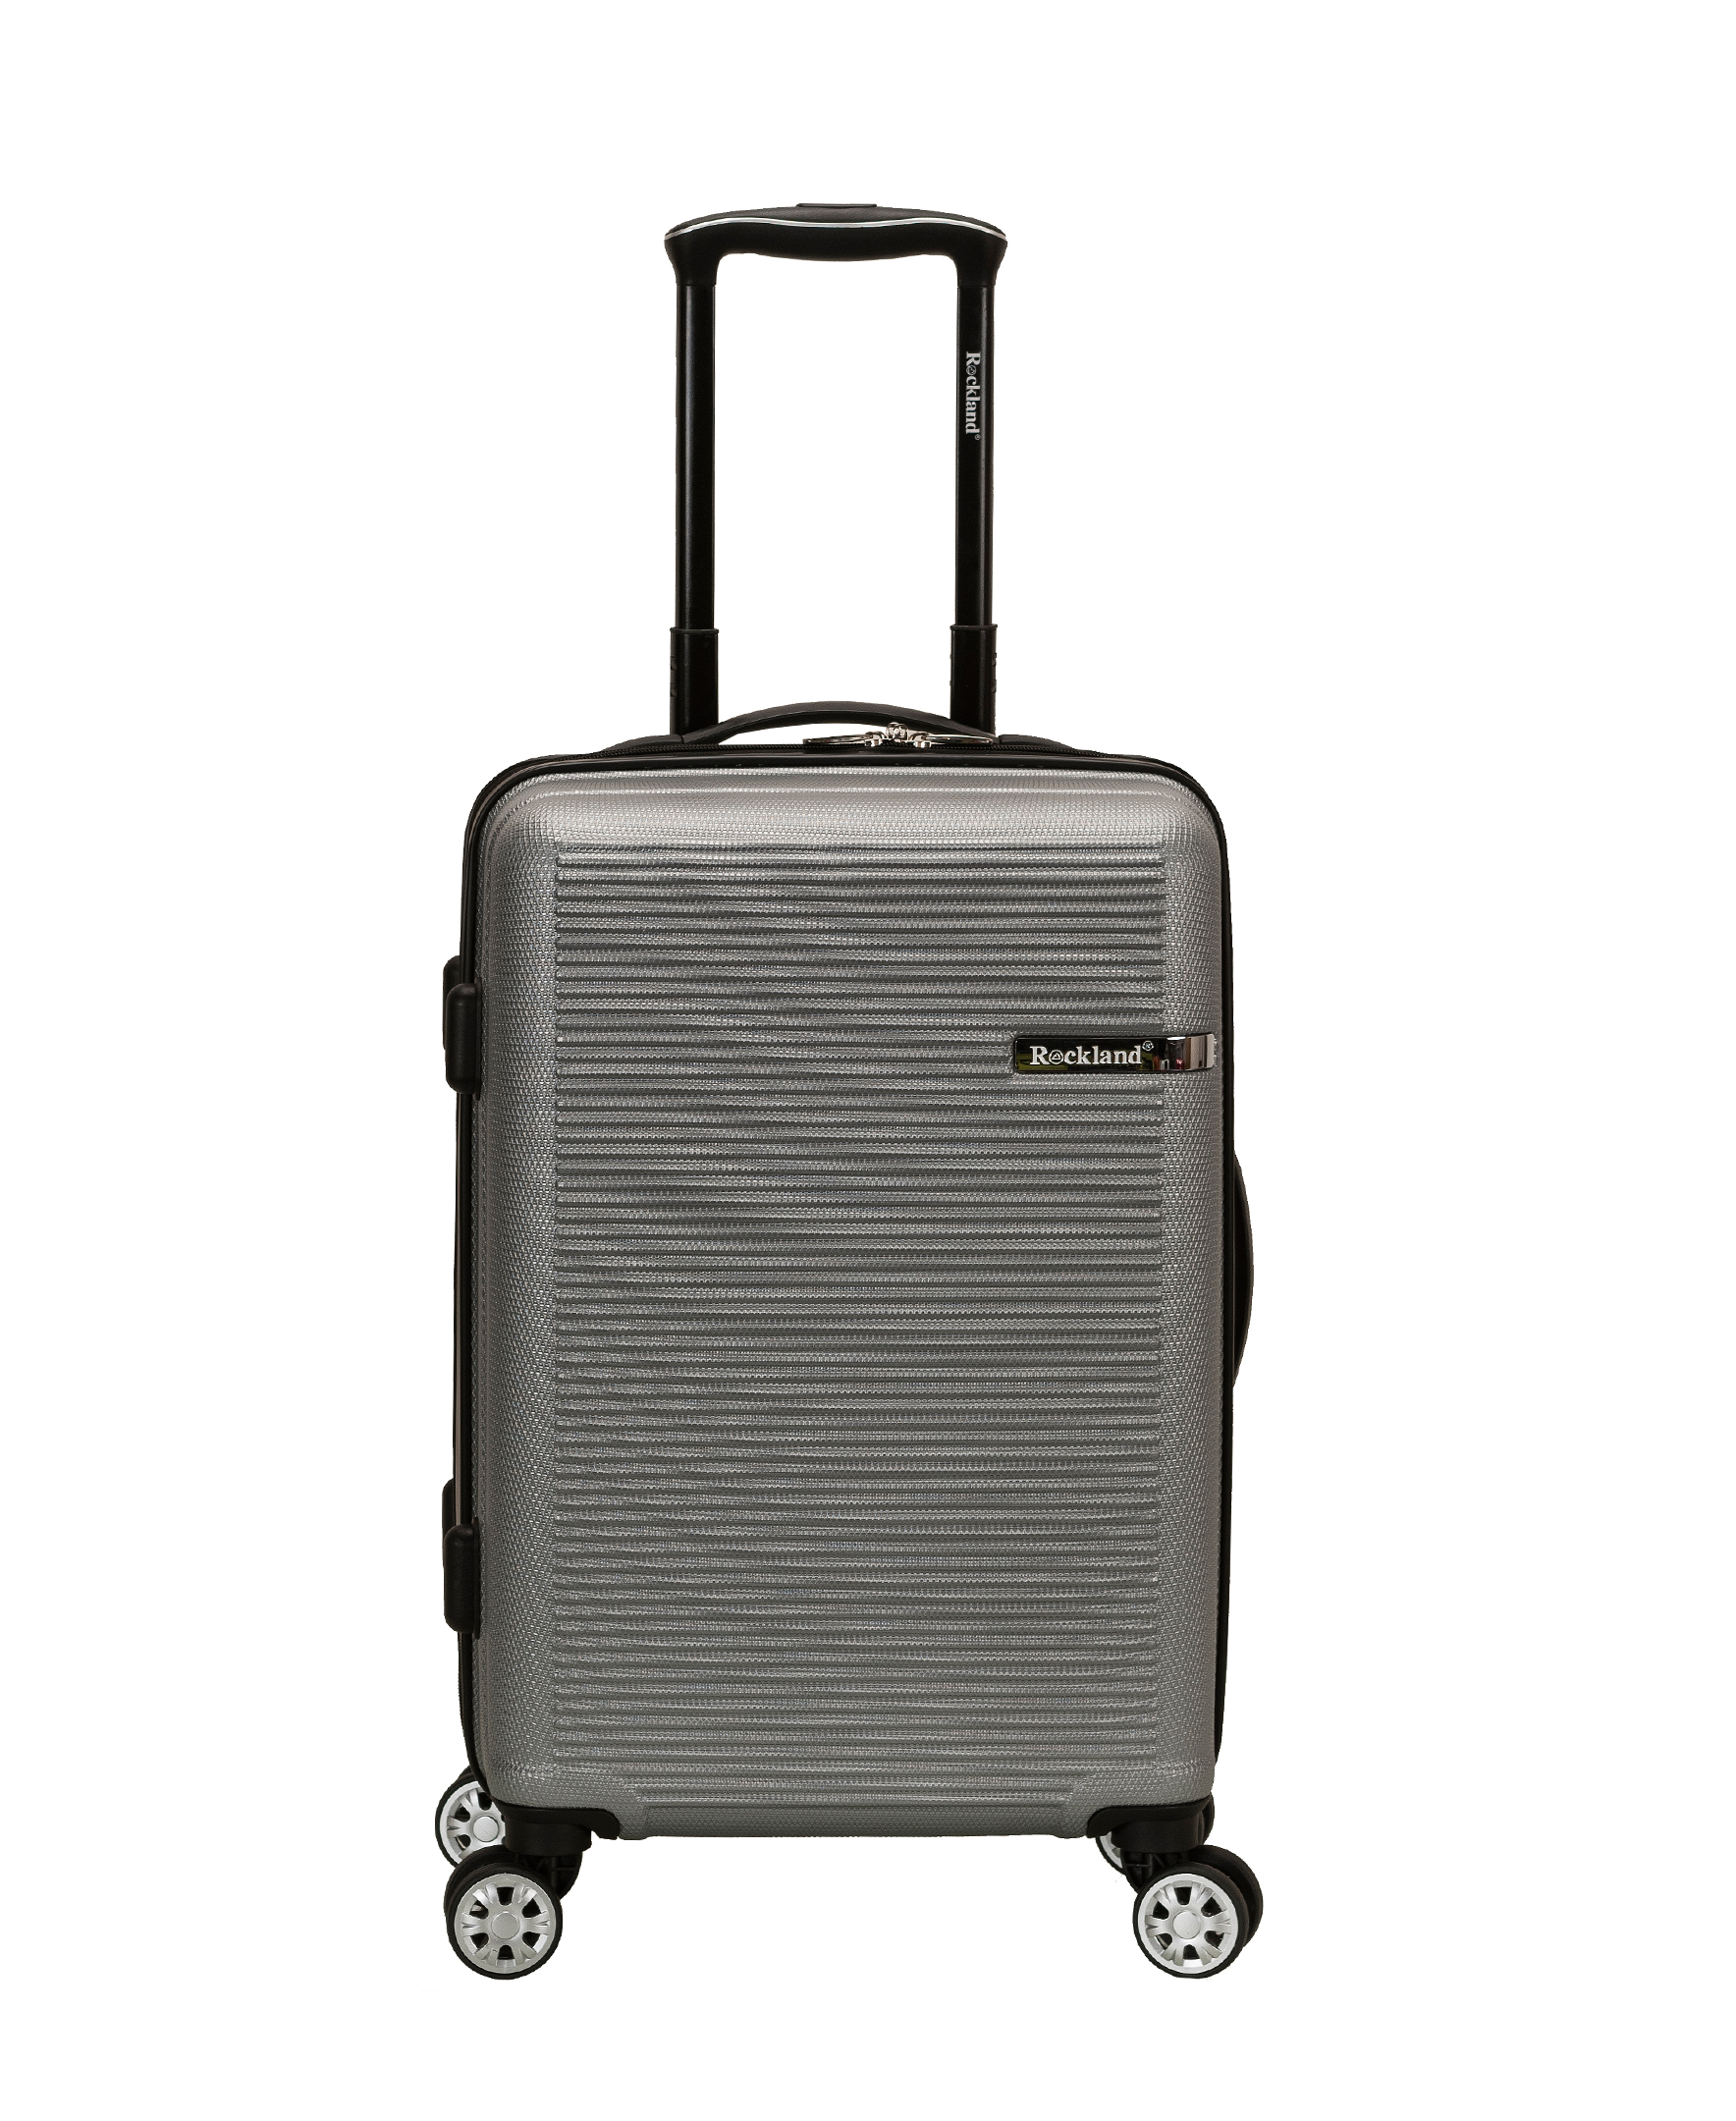 Rockland Luggage Skyline 3 Piece Hardside ABS Non-Expandable Luggage Set, F240 - image 3 of 8